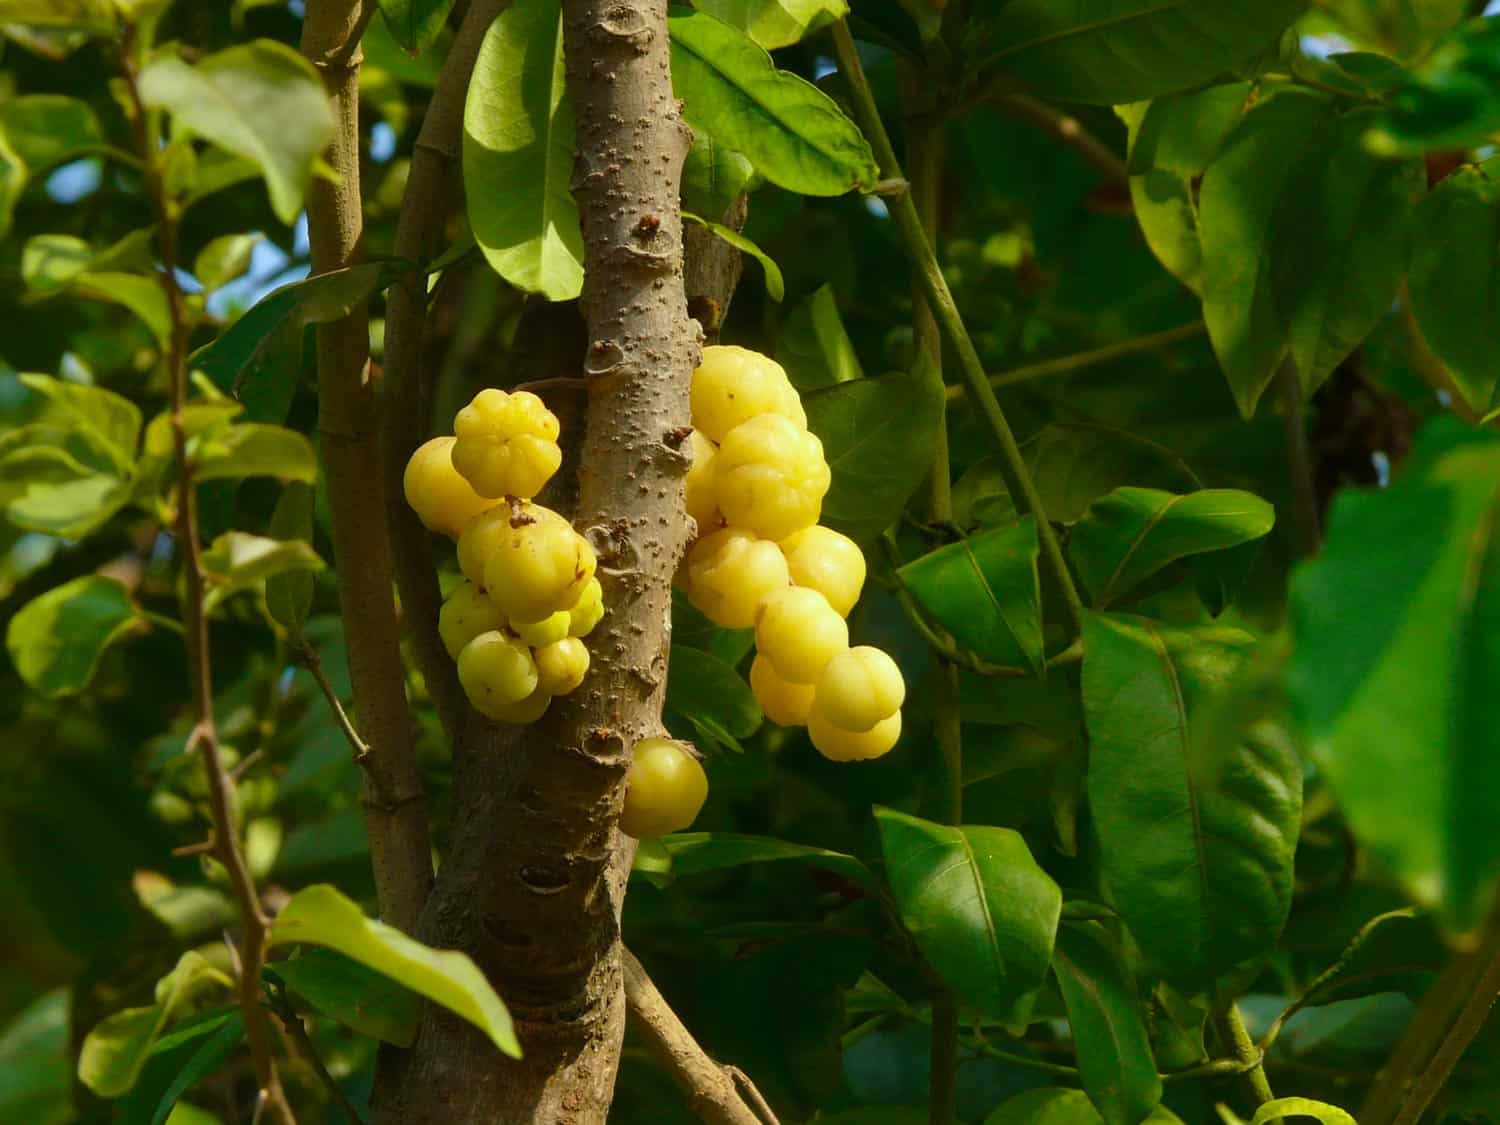 Jamaican otaheite gooseberry also known as jimblin fruit in Jamaica, on a tree.